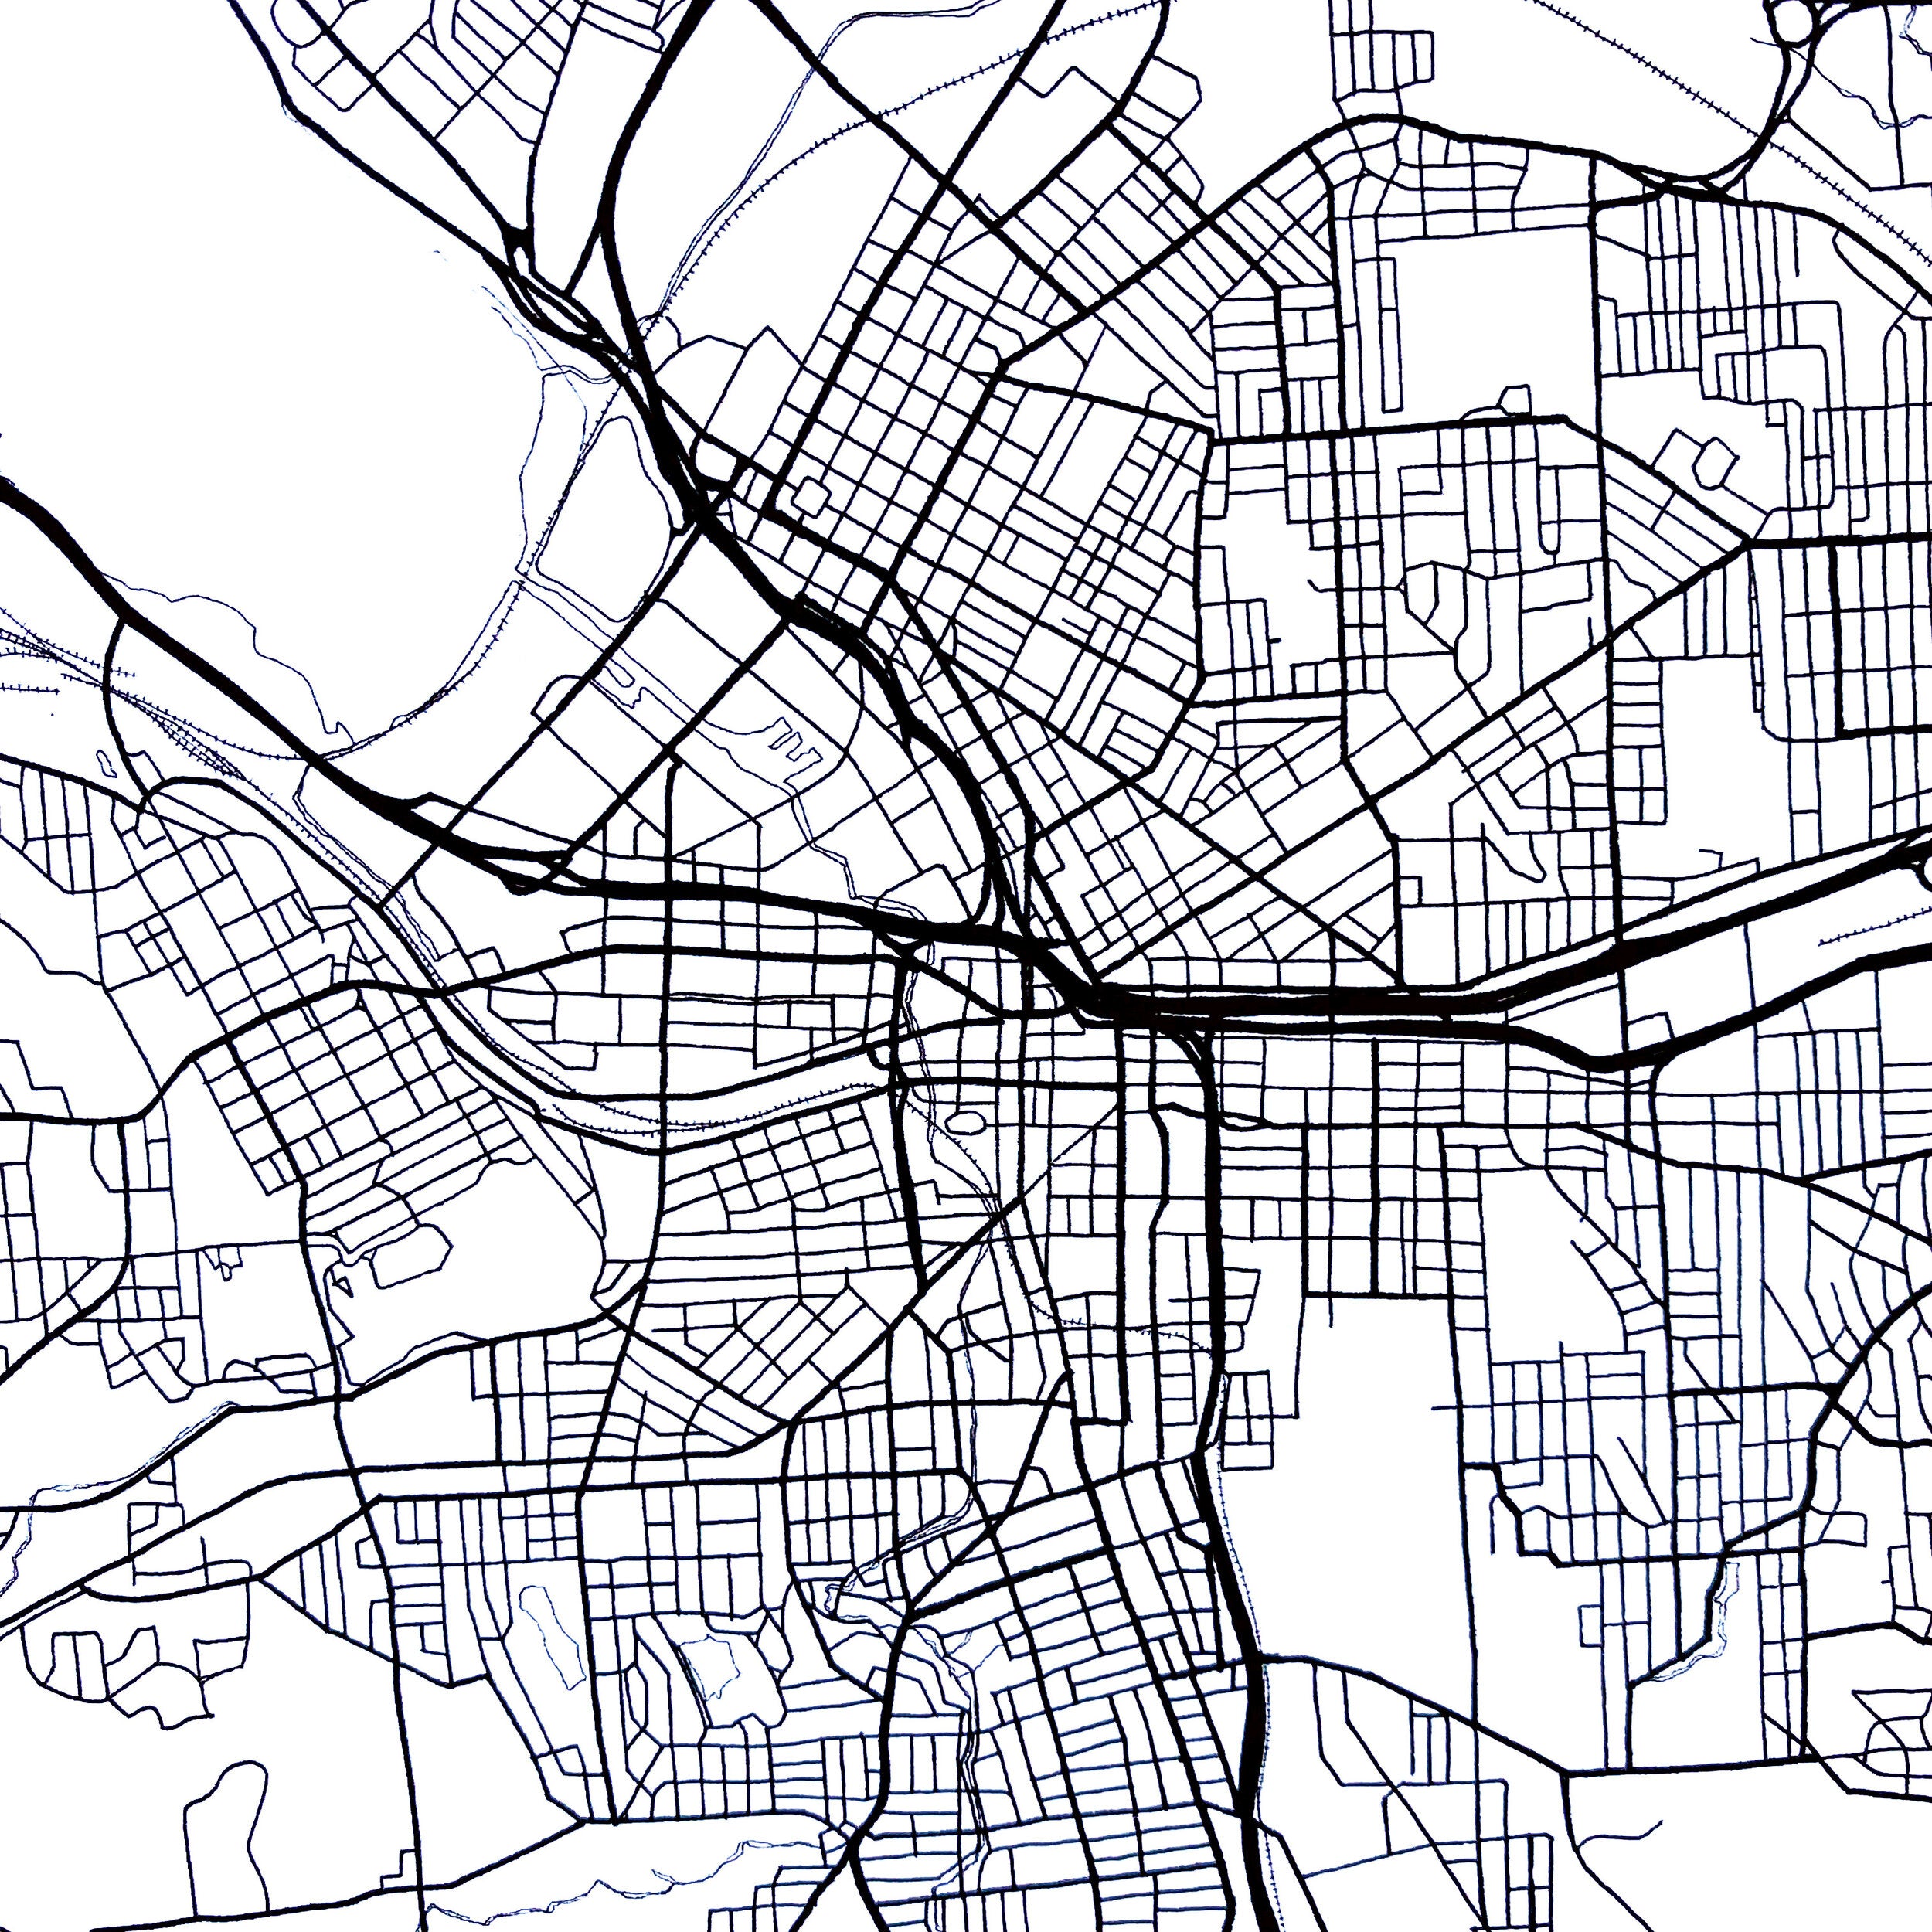 SYRACUSE City Lines Map: PRINT